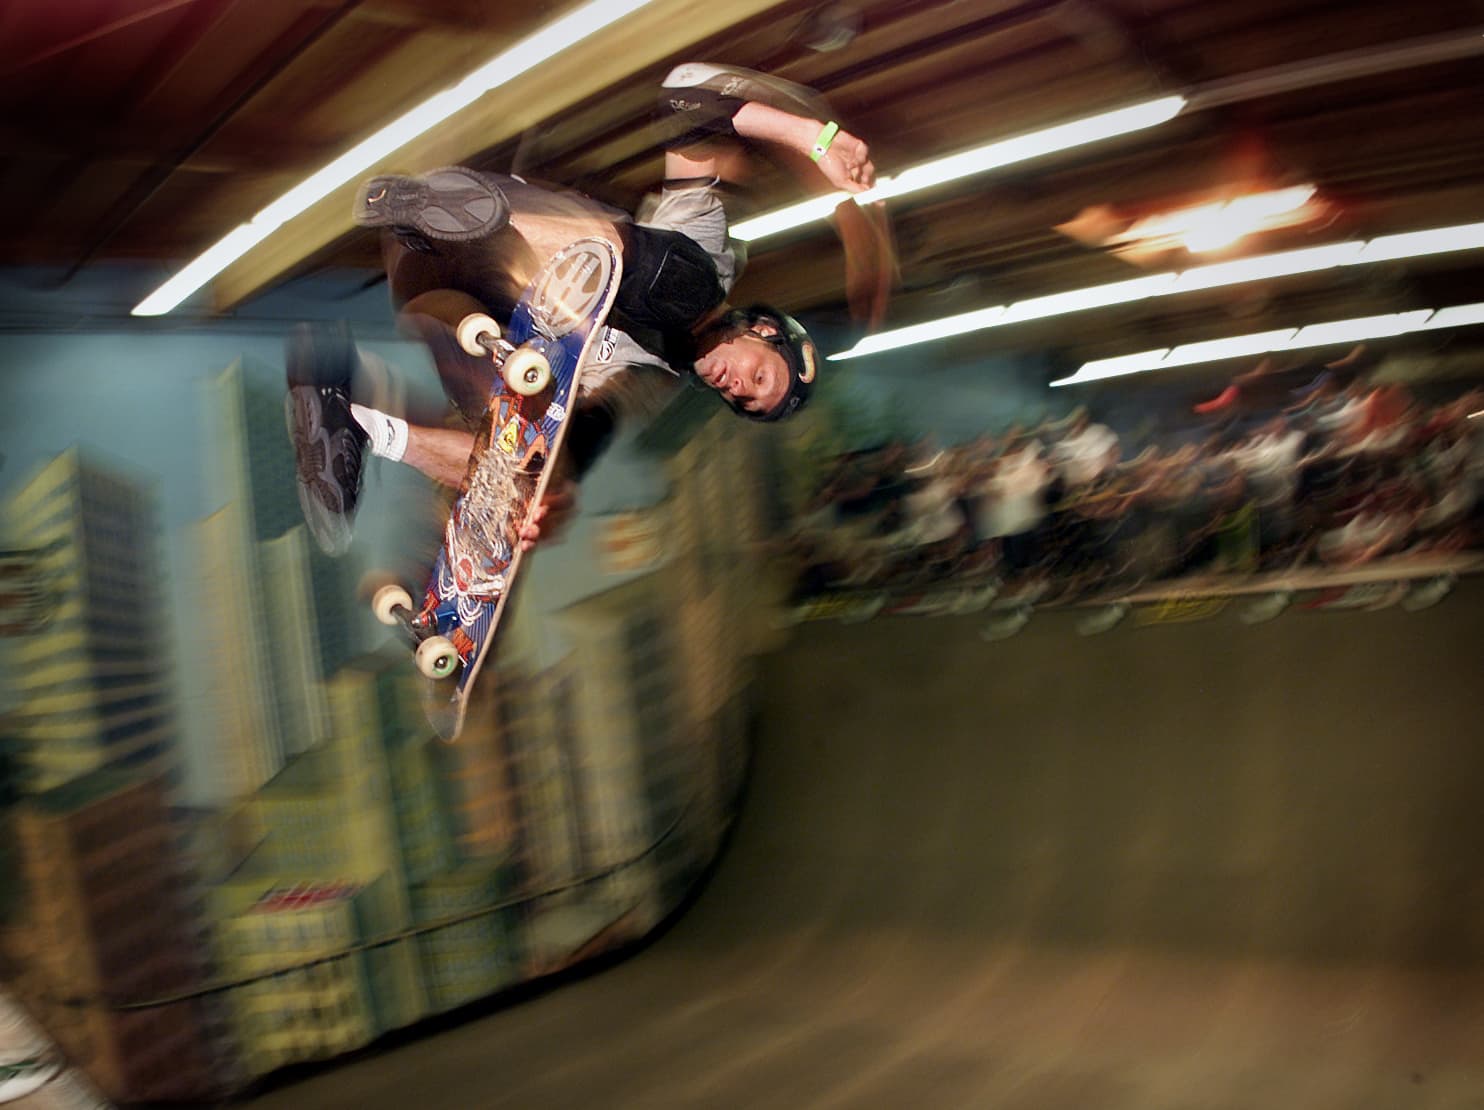 Spencer hawk skateboarding